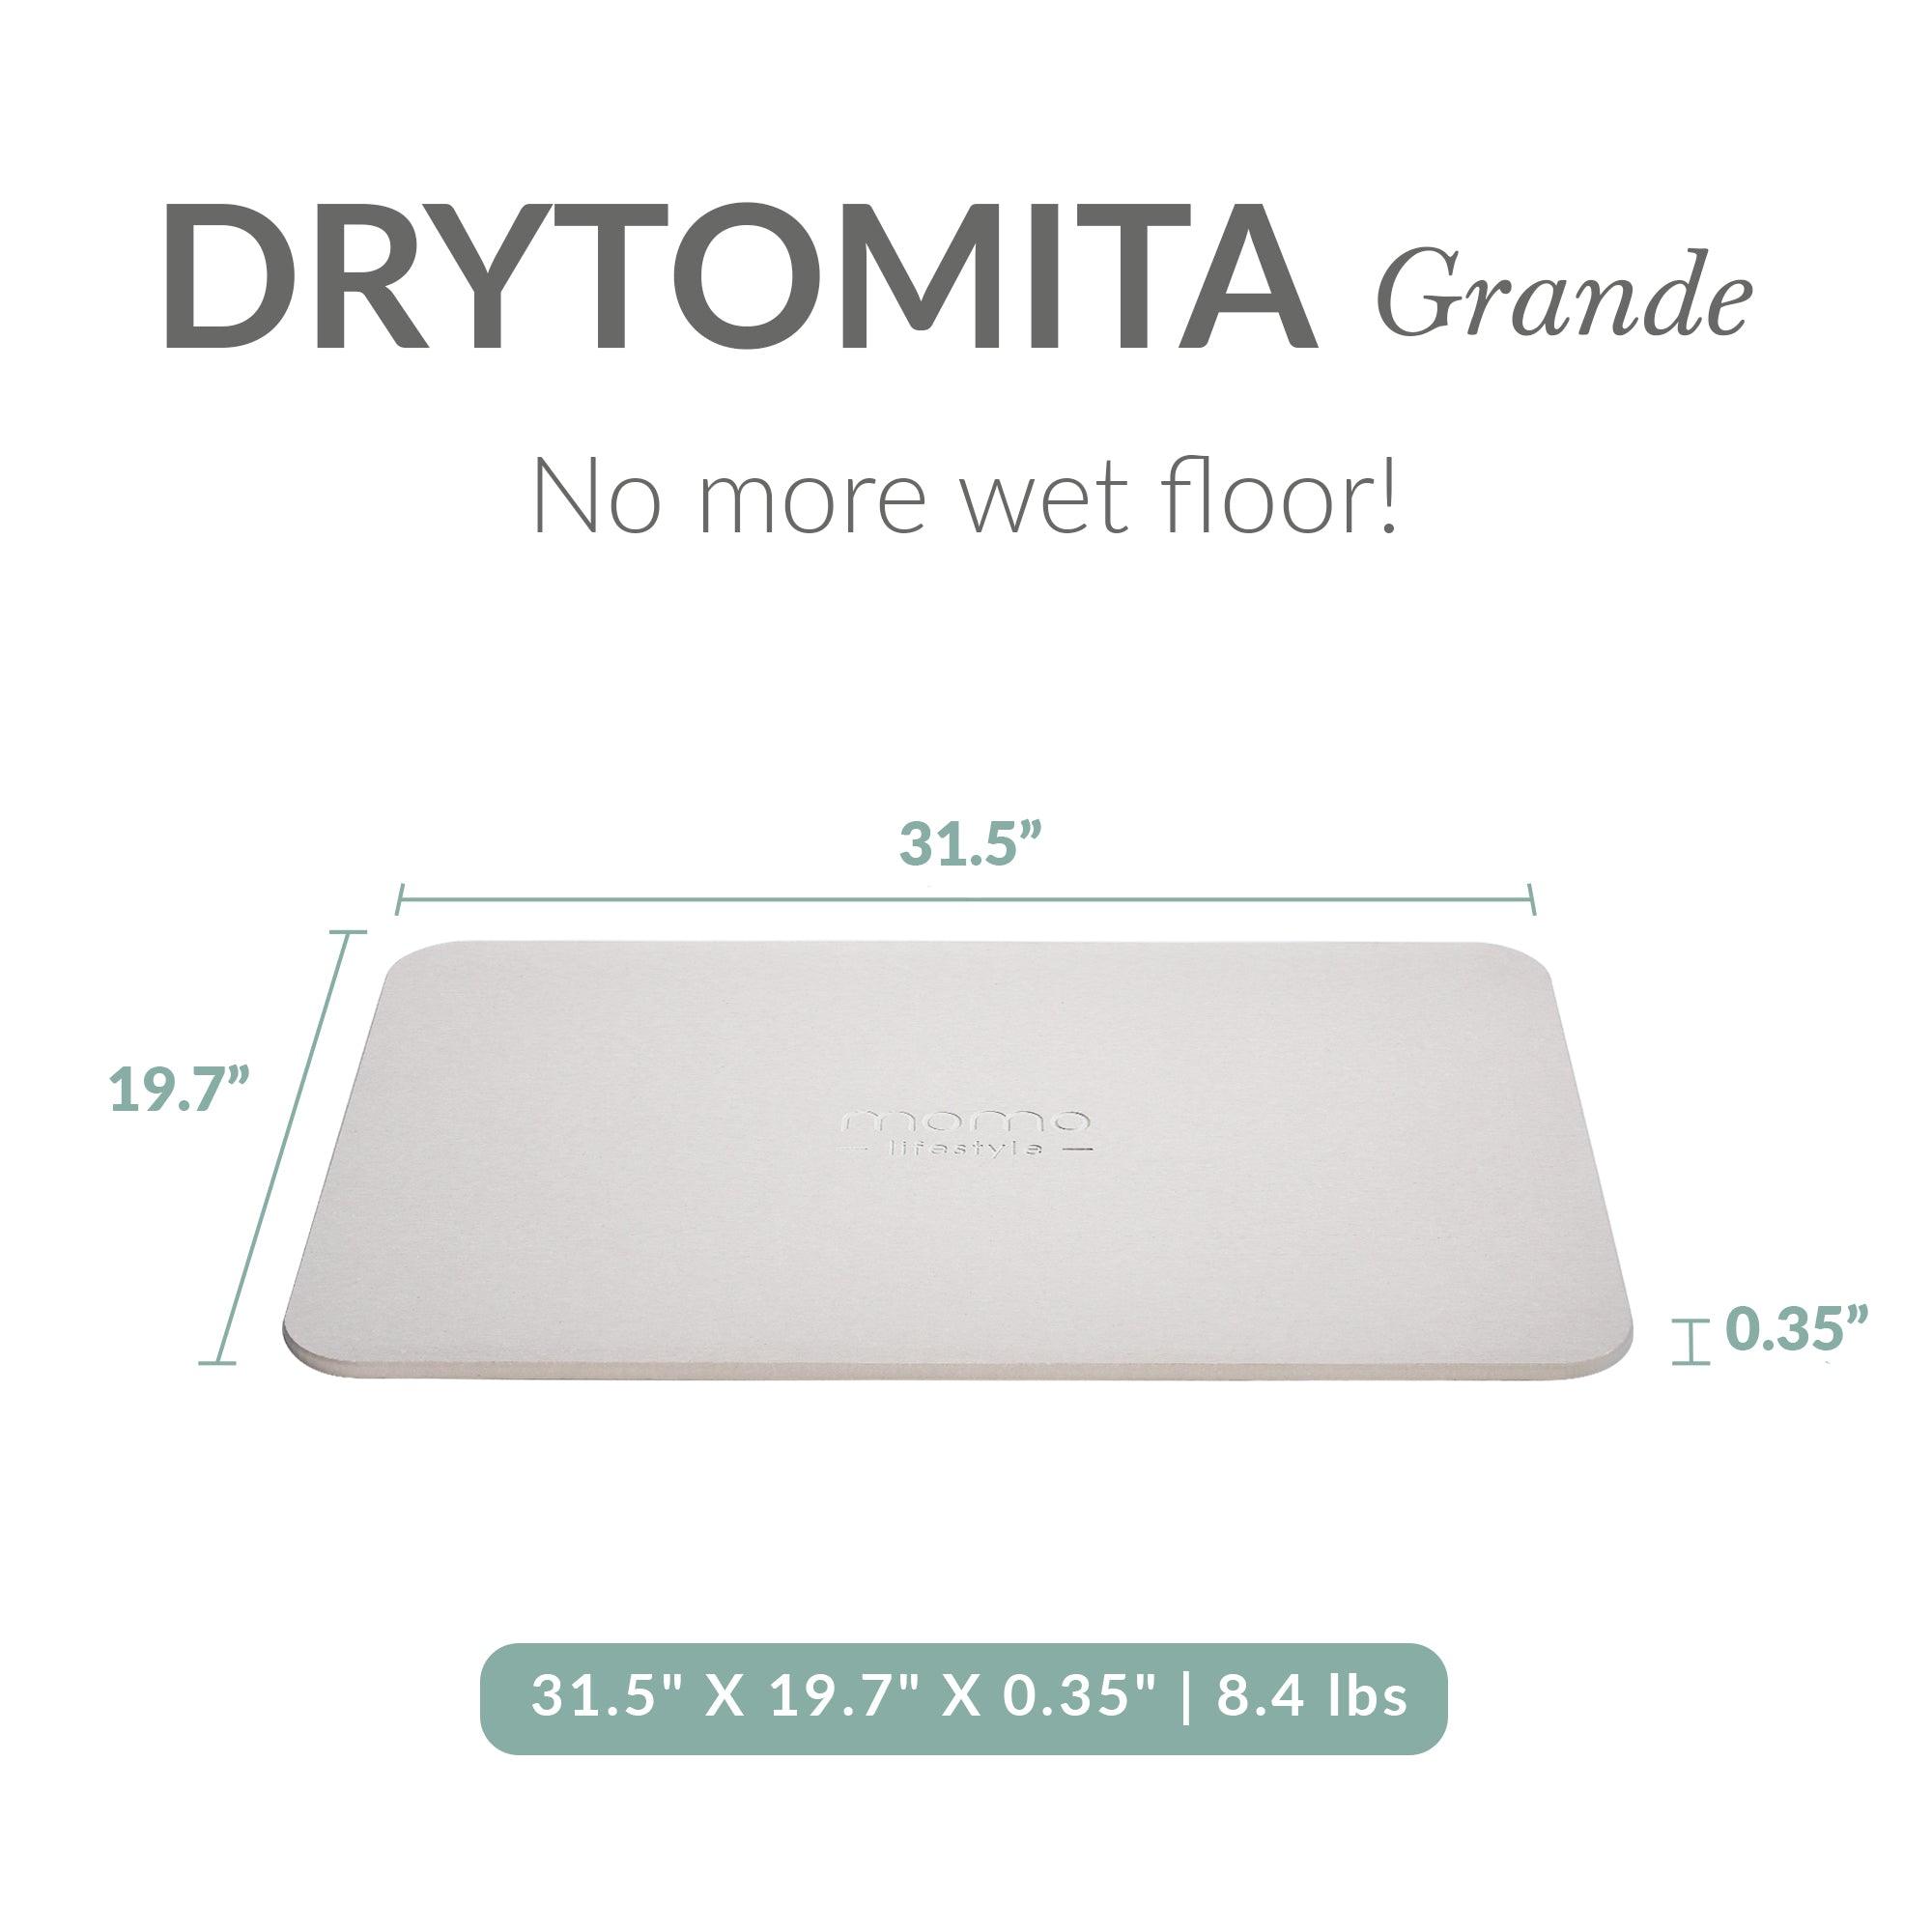 Momo Lifestyle Stone Bath Mat Drytomita Technology Diatomaceous Earth Bath Mat, Non-Slip Super Absorbent Quick Drying Shower Mat